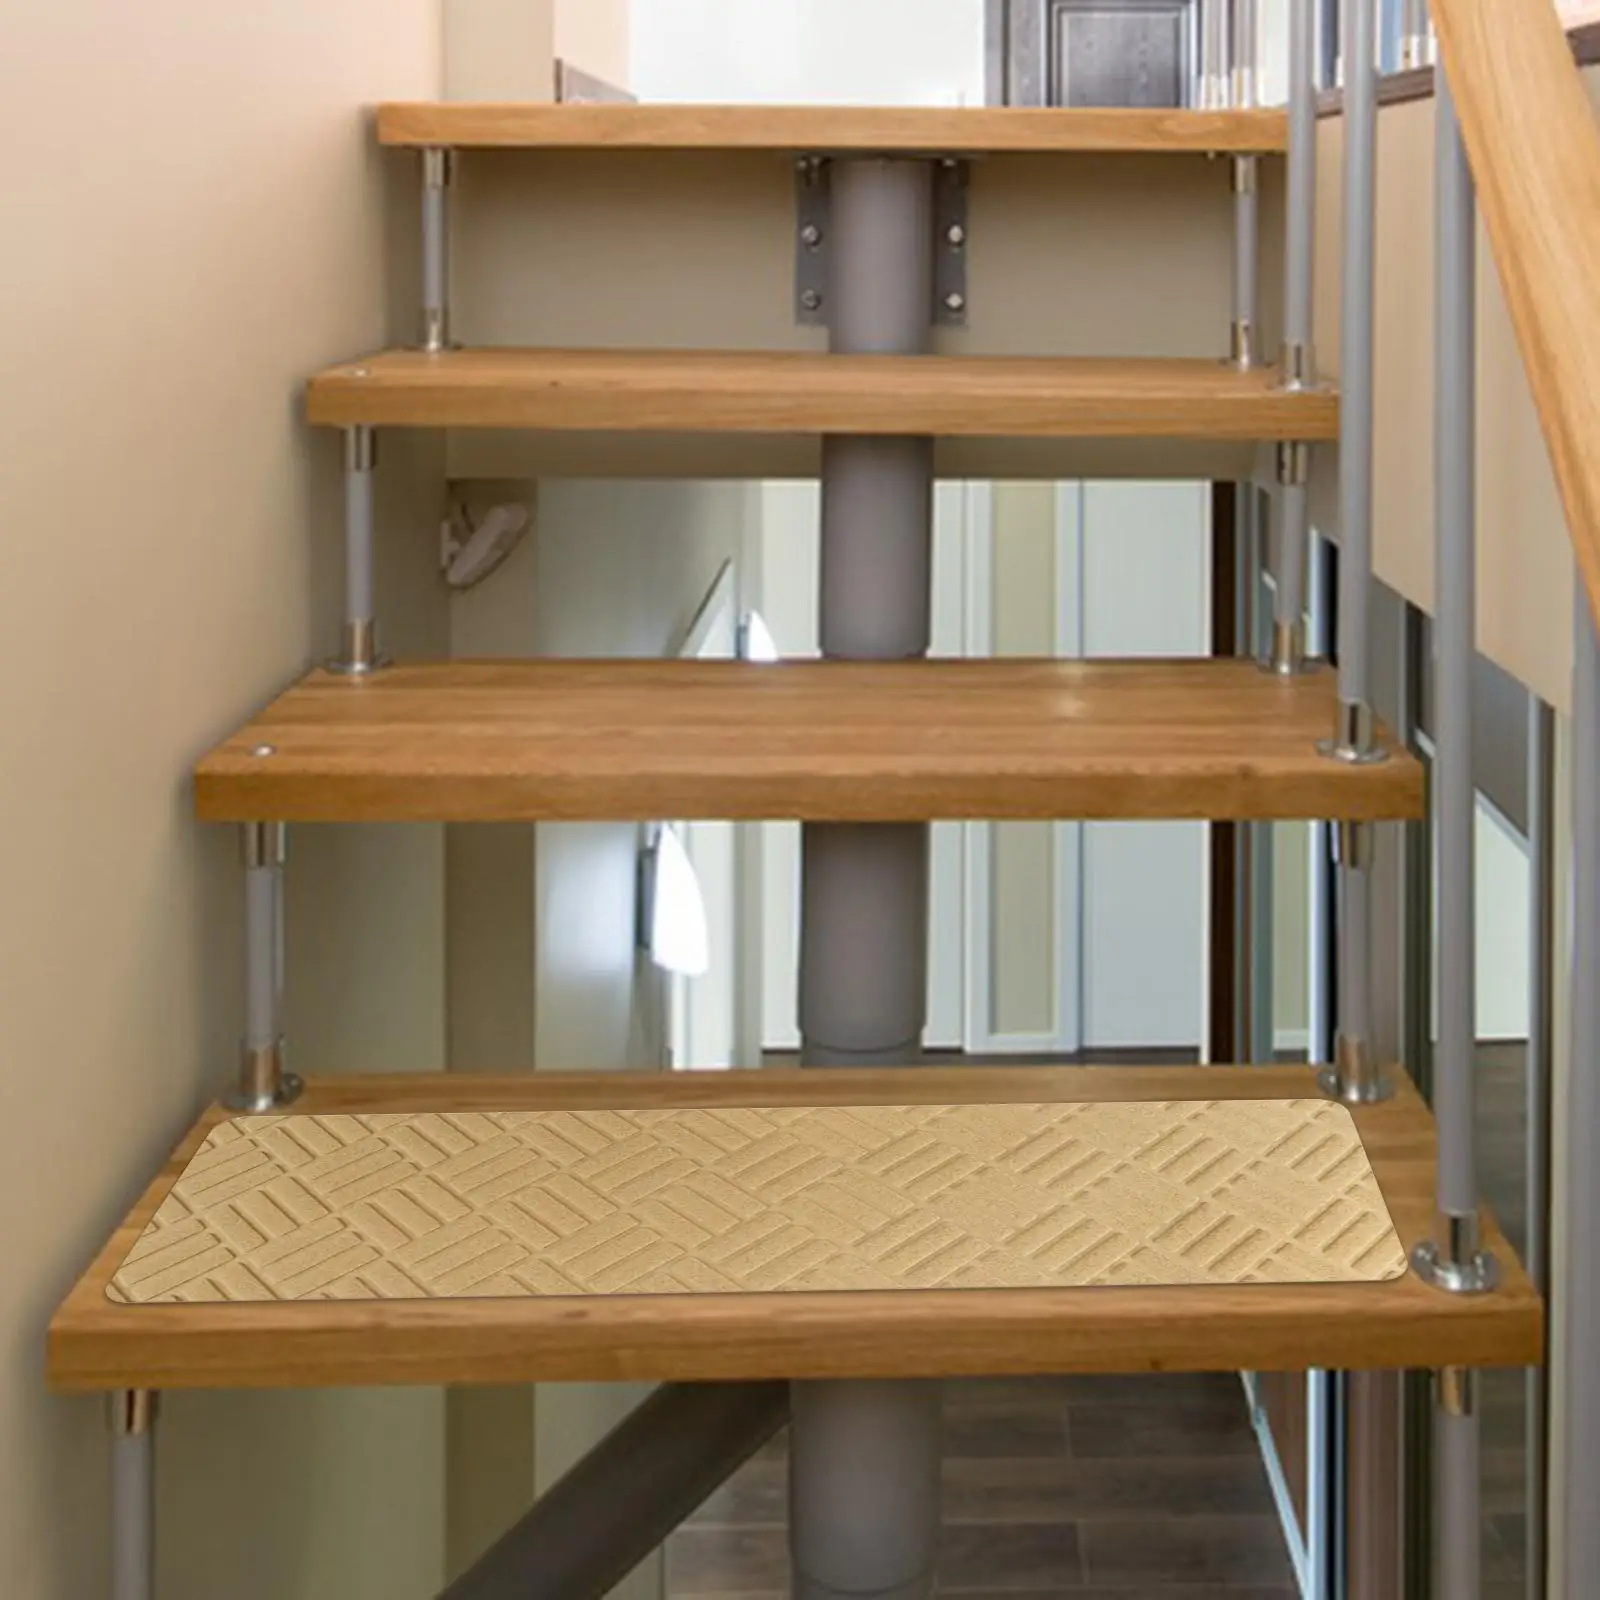 Stair Mats Carpet Mat Stair Carpet Treads Strips Indoor Stair Rugs for Corridor Bedroom Living Room Wooden Steps Restaurant